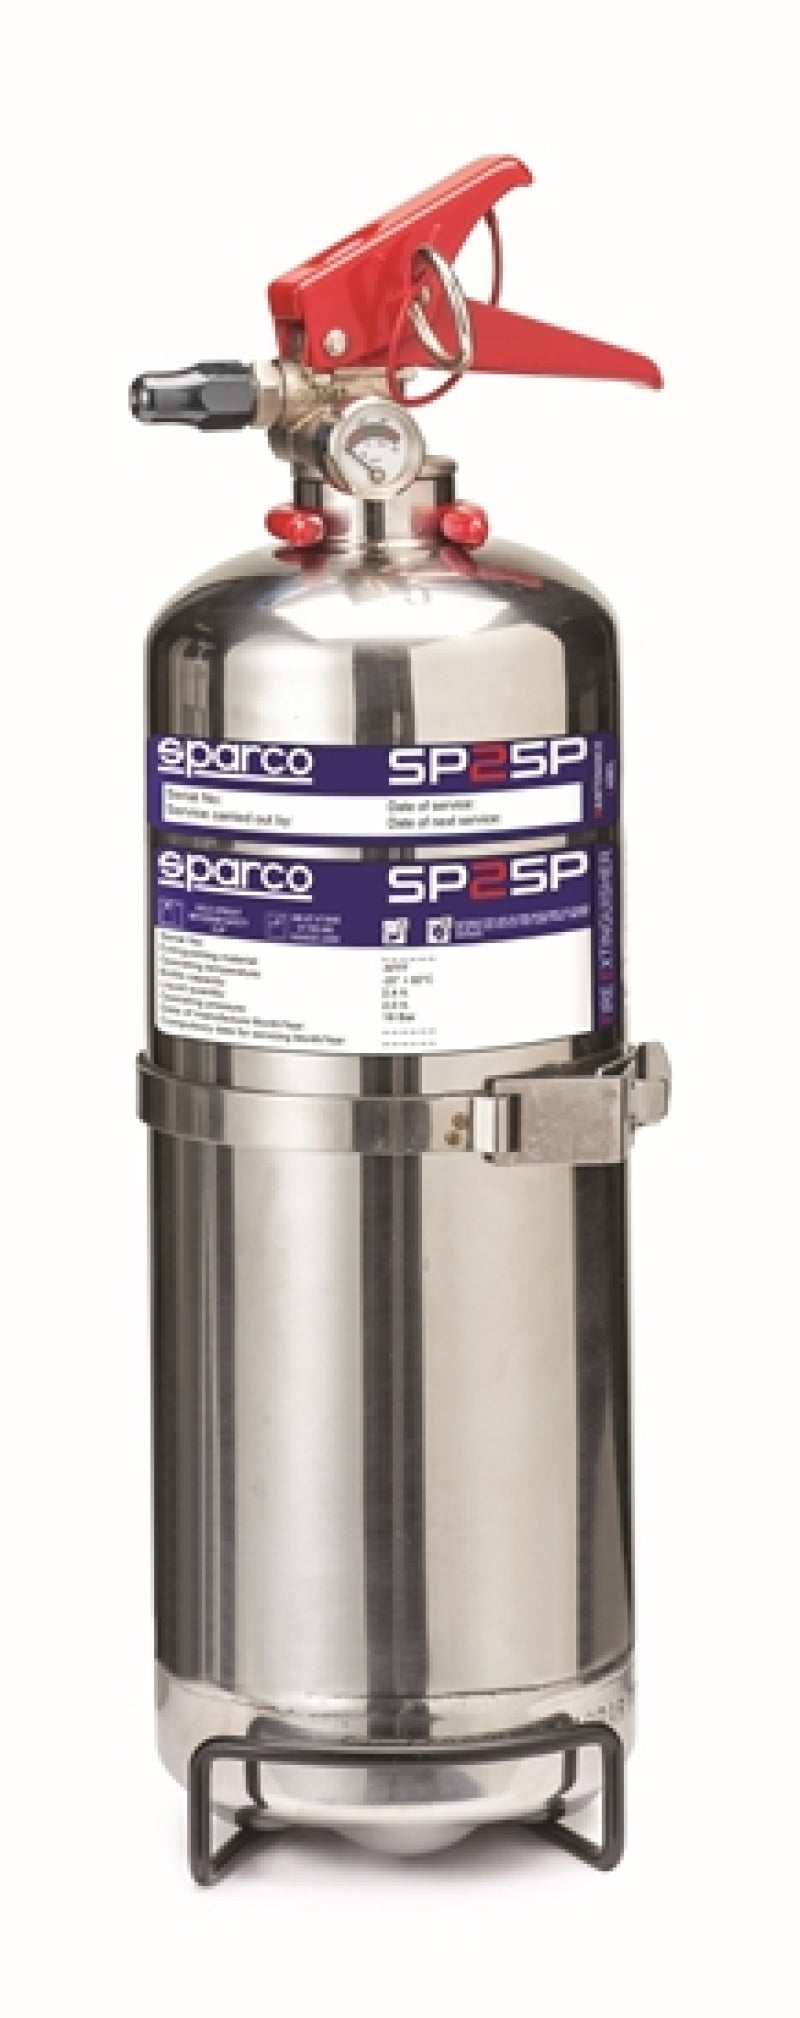 Sparco 2 Liter Handheld Steel Extinguisher